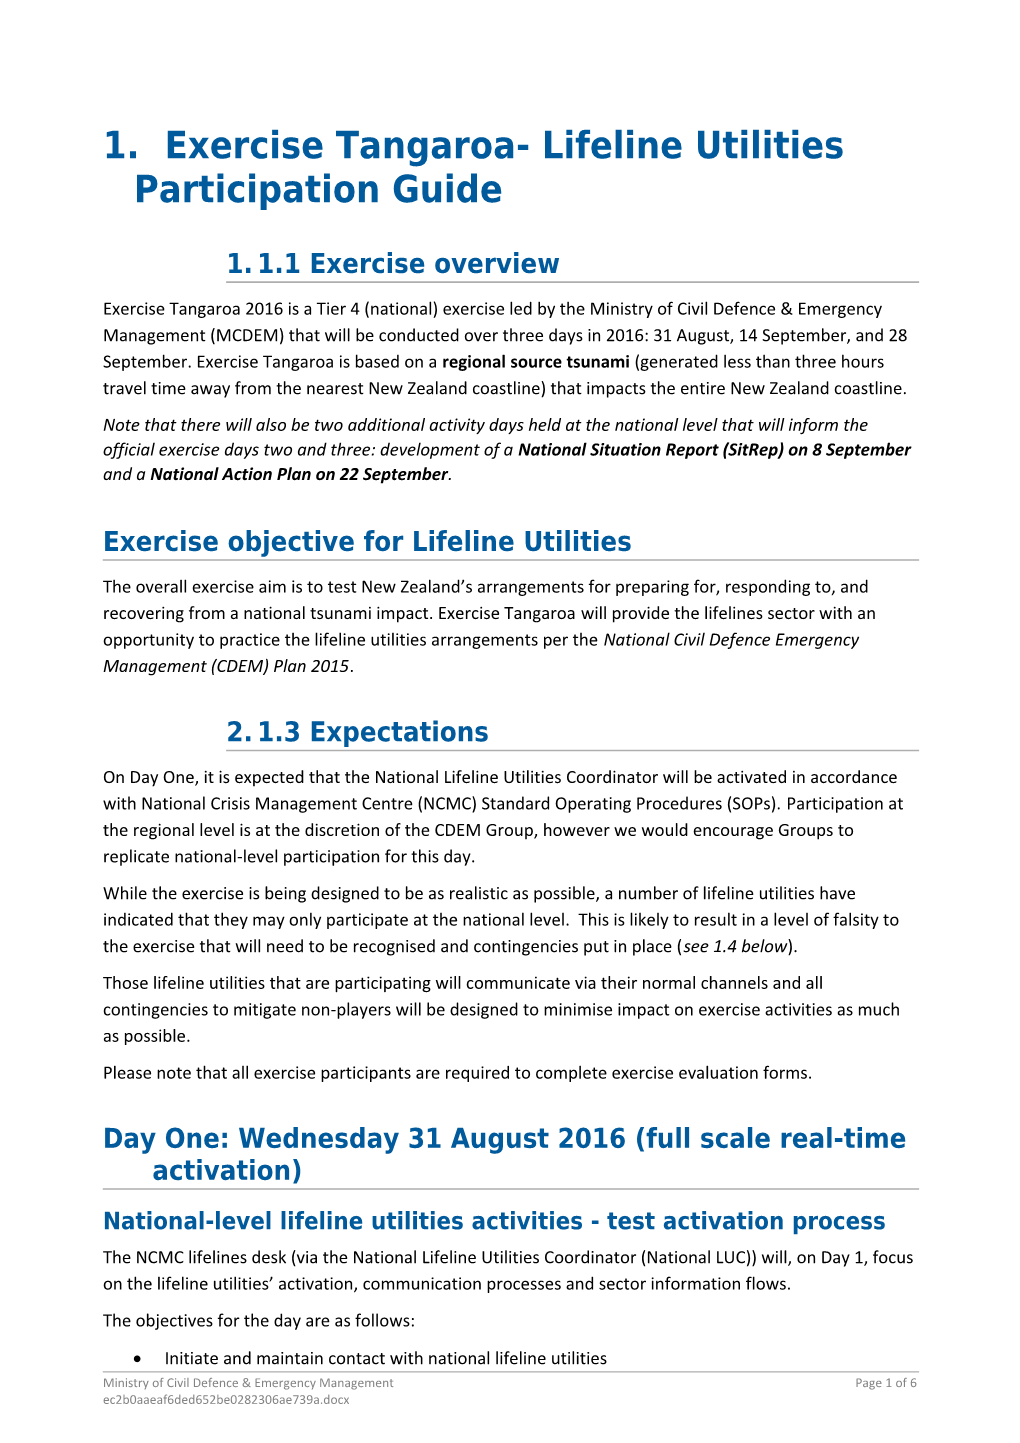 Exercise Tangaroa- Lifeline Utilities Participation Guide